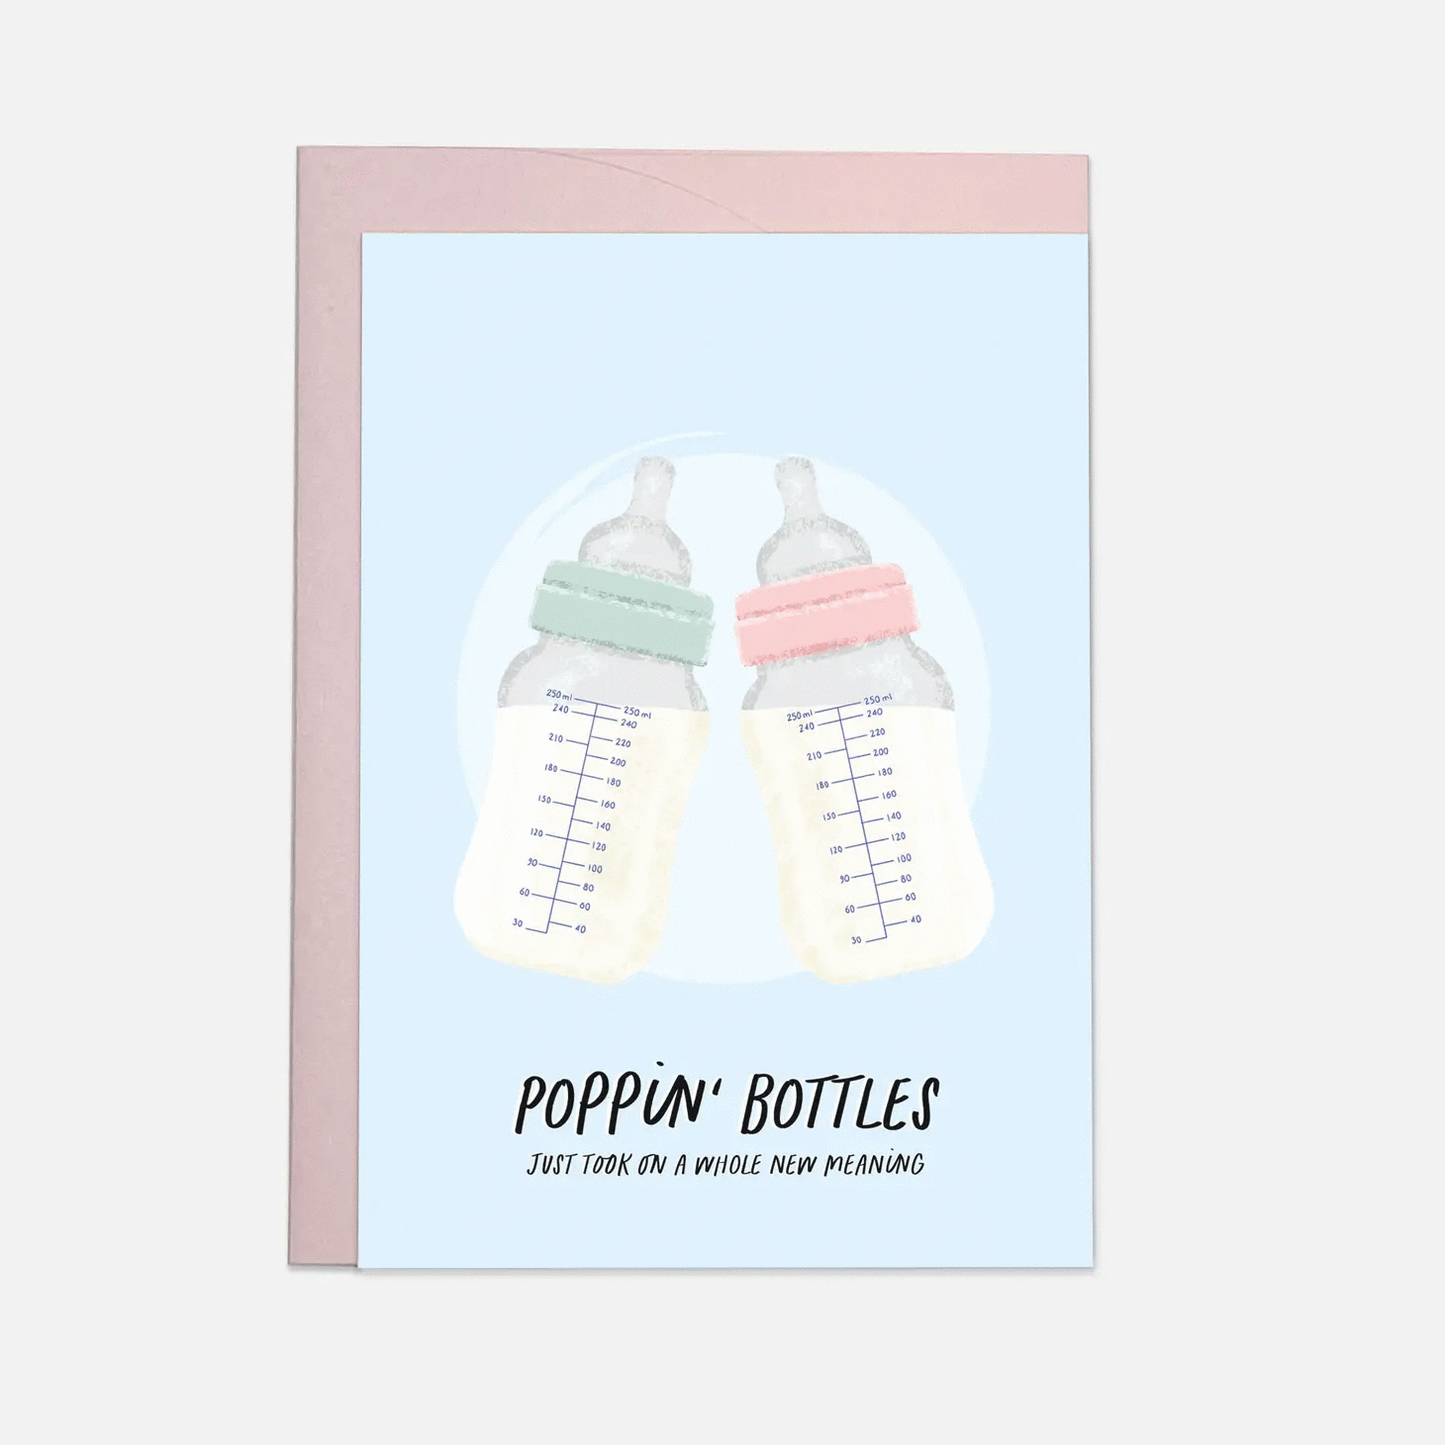 Poppin' bottles - greeting card